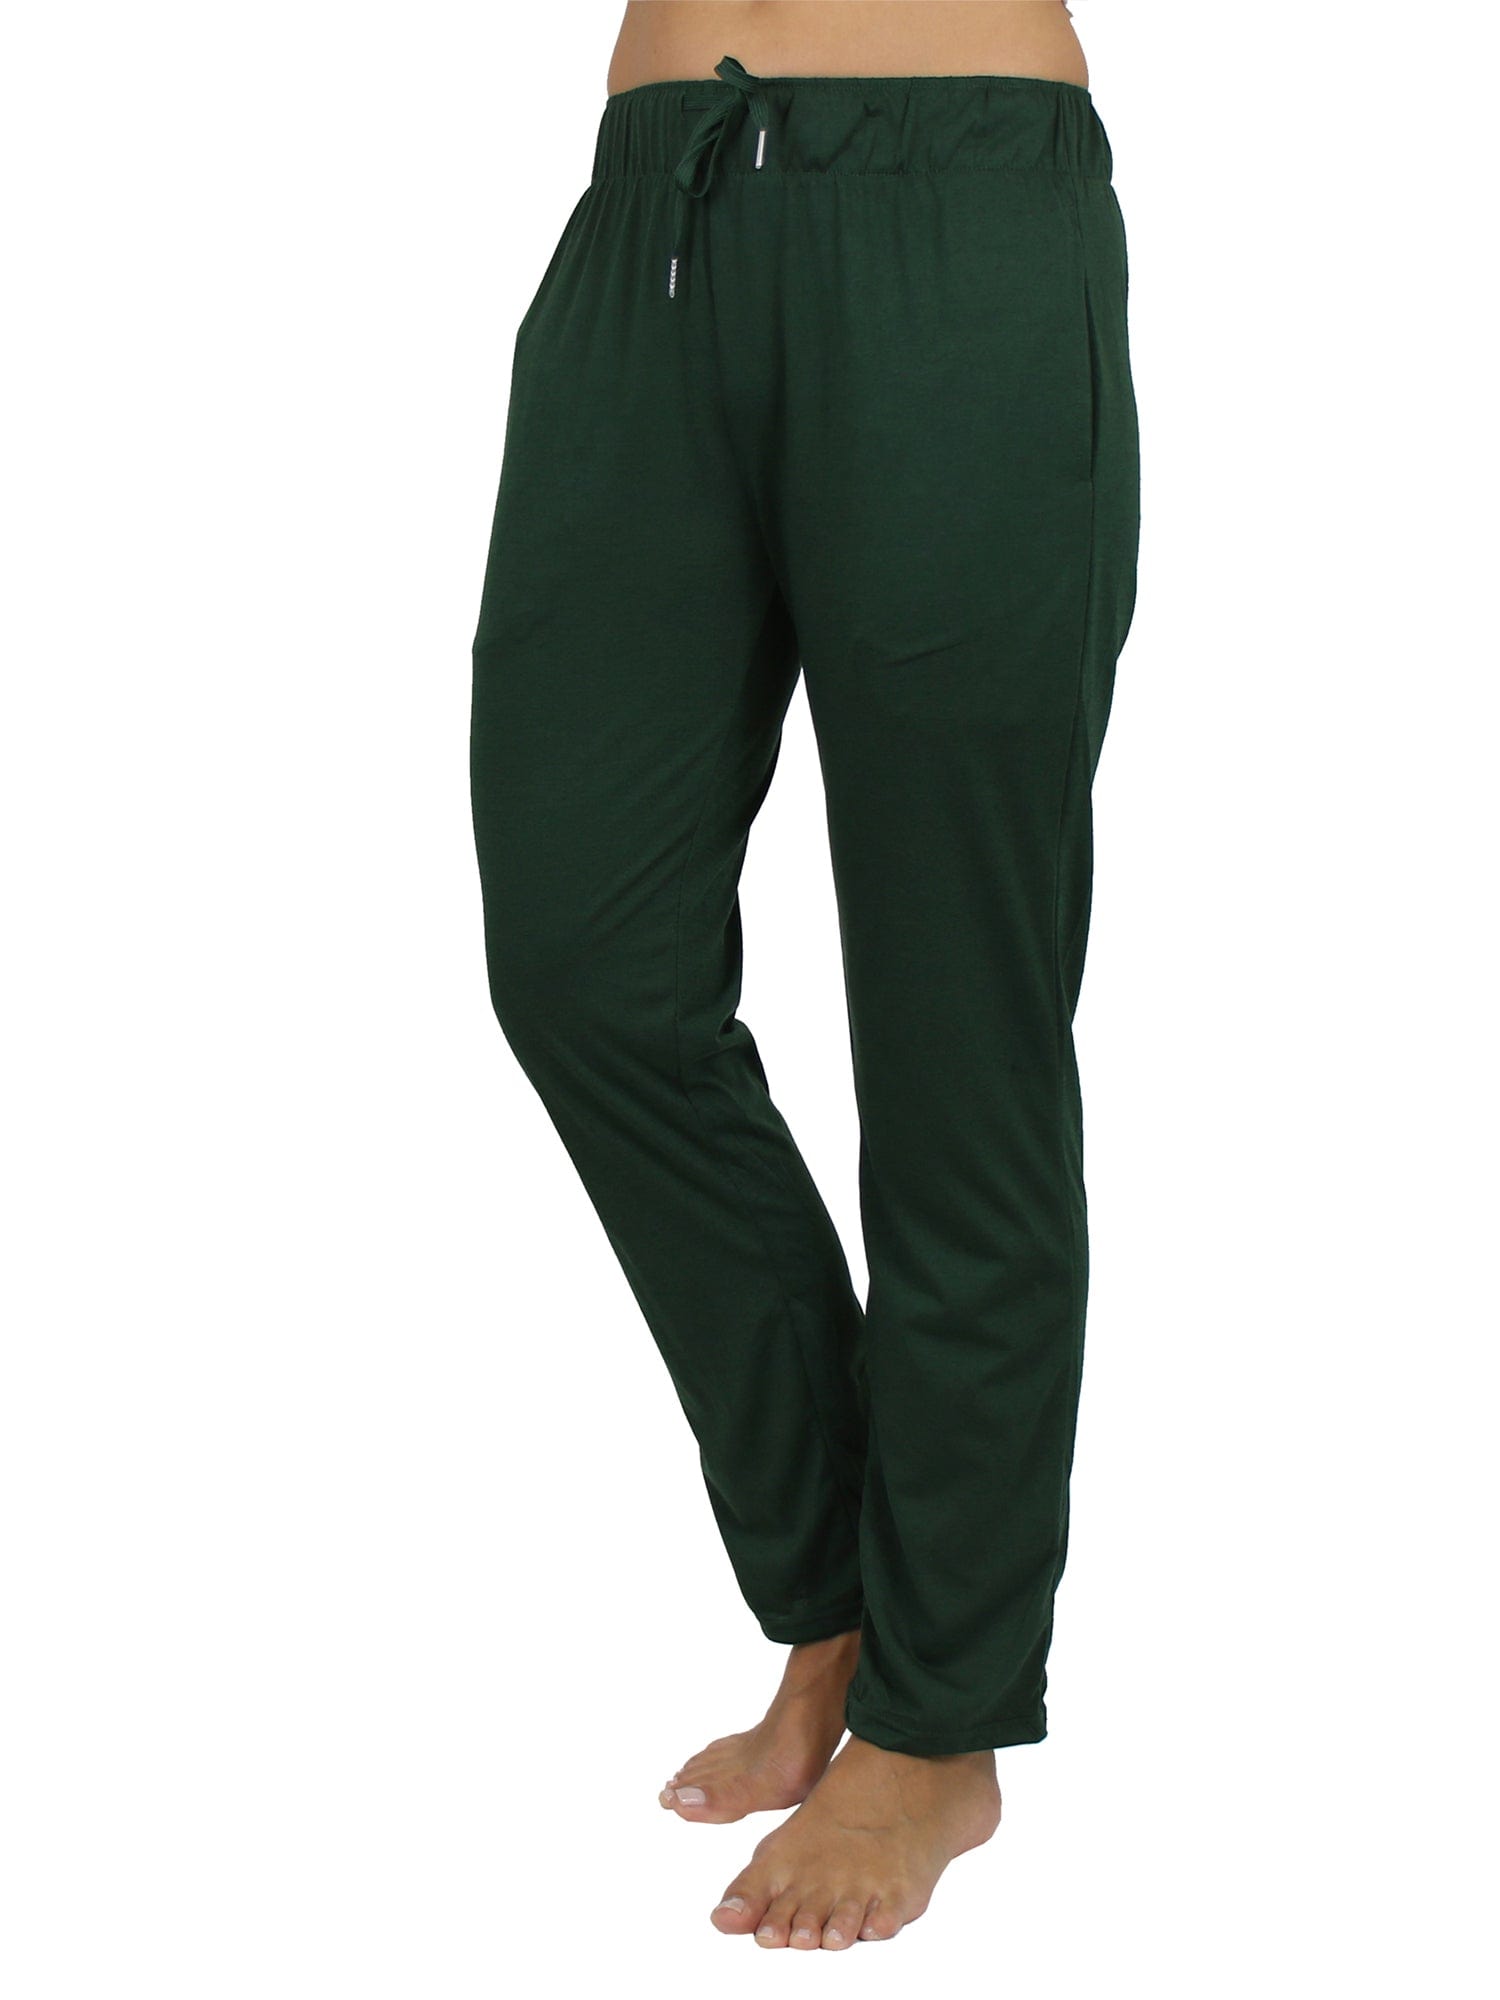 Women's Loose Fit Classic Lounge Pants (Sizes, S-3XL)